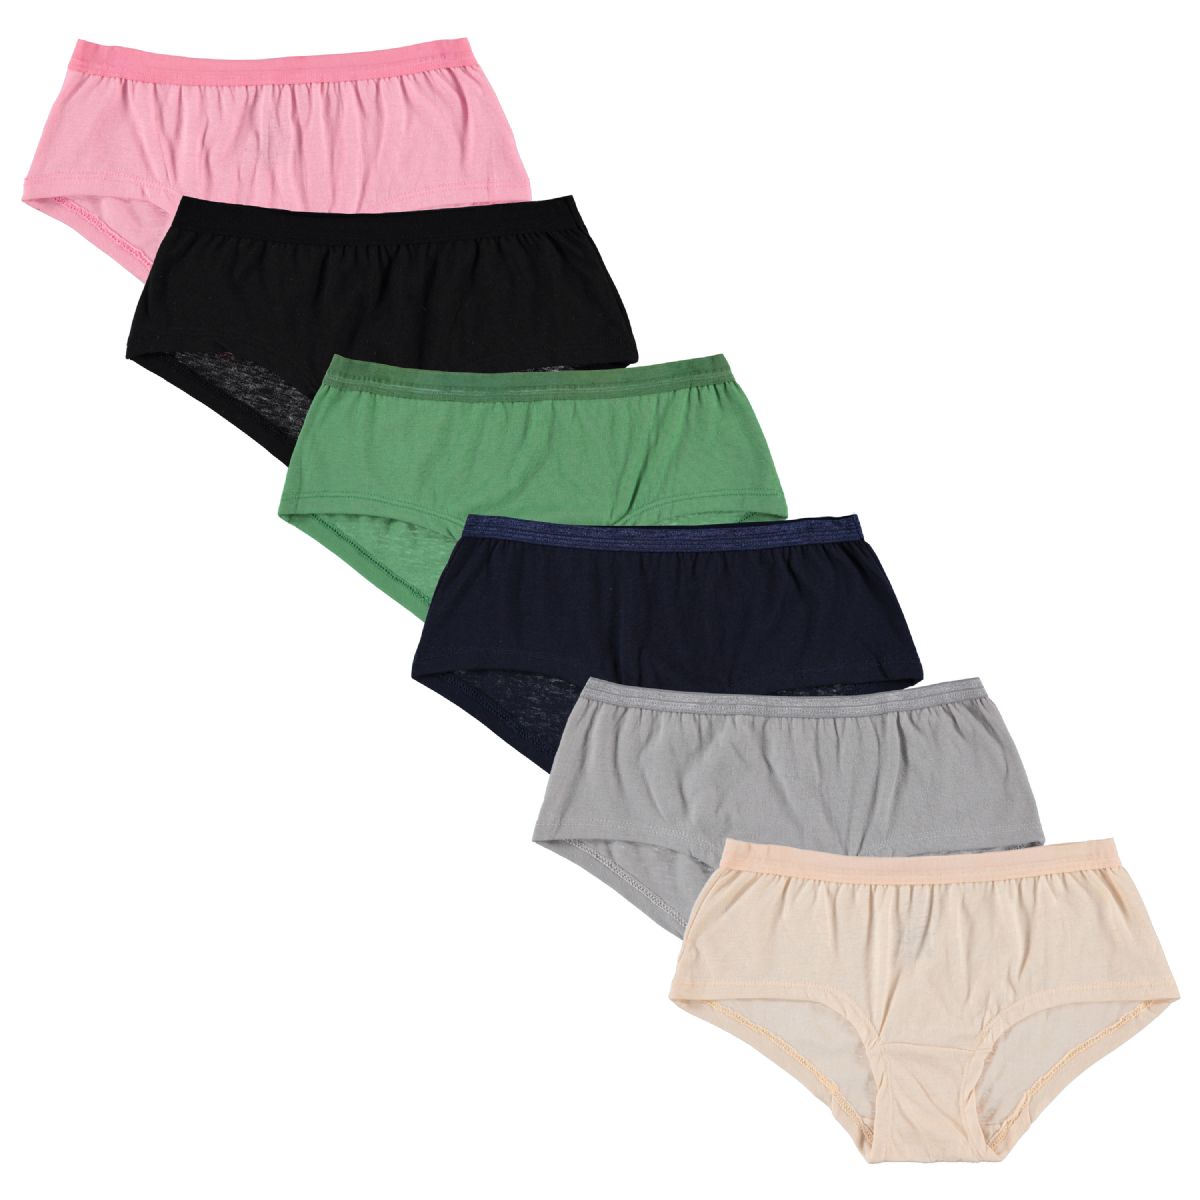 180 Wholesale Yacht & Smith Womens Cotton Lycra Underwear, Panty Briefs,  95% Cotton Soft Assorted Colors, Size Large